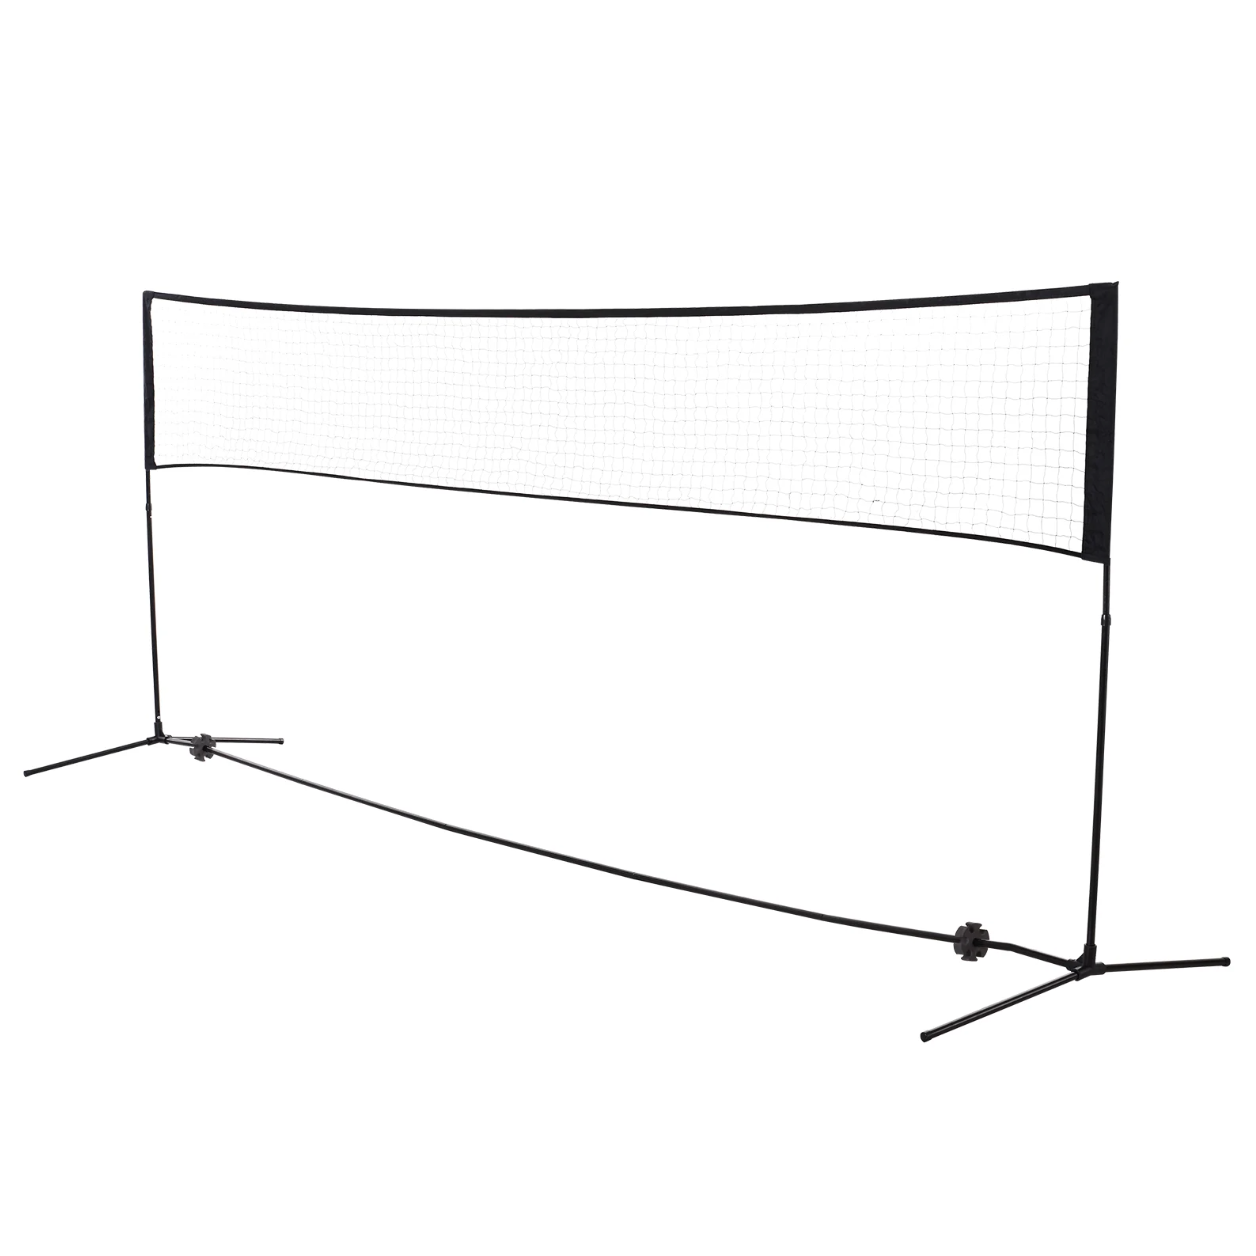 Filet de badminton de Nancy - Filet de volley-ball - Filet de tennis - Portable - 2 hauteurs - Sac de transport - 94/158 x 400 x 60 cm 